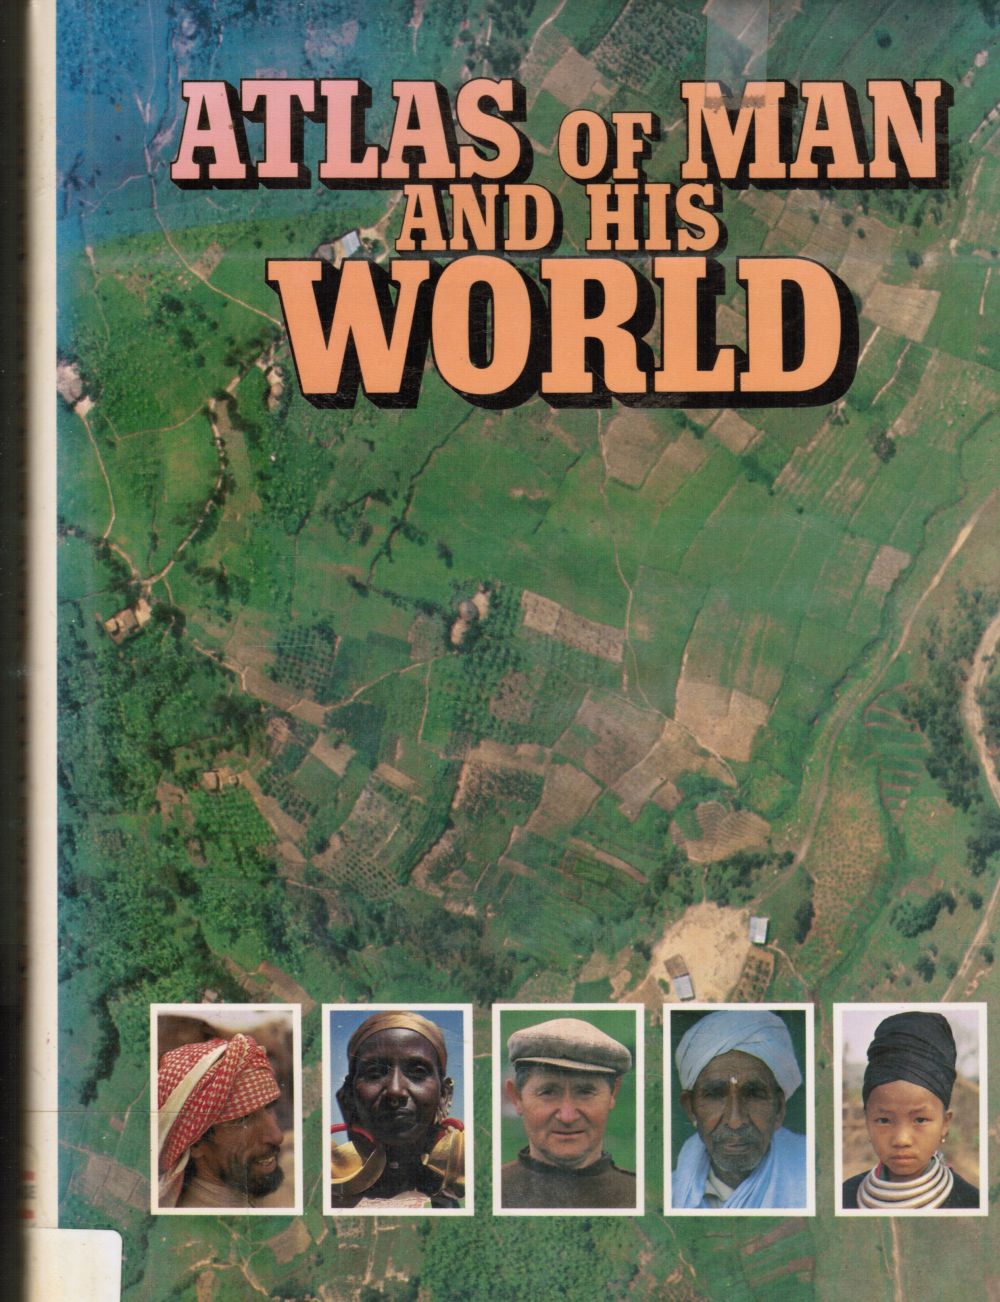 CARPENTER, SHIRLEY - Atlas of Man and His World